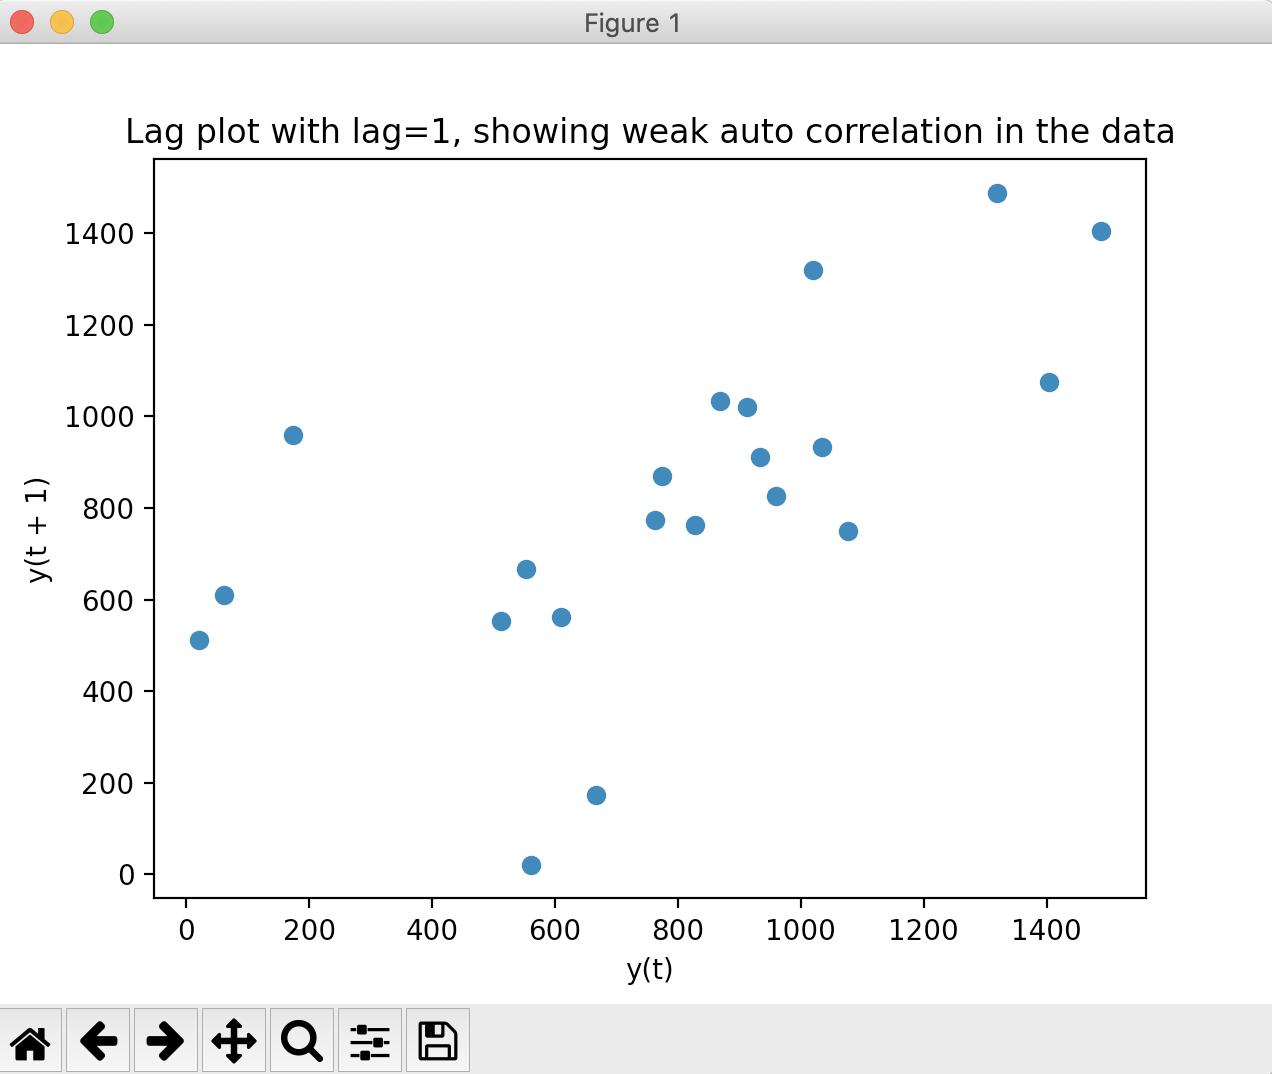 Lag plot showing weak auto correlation in the data